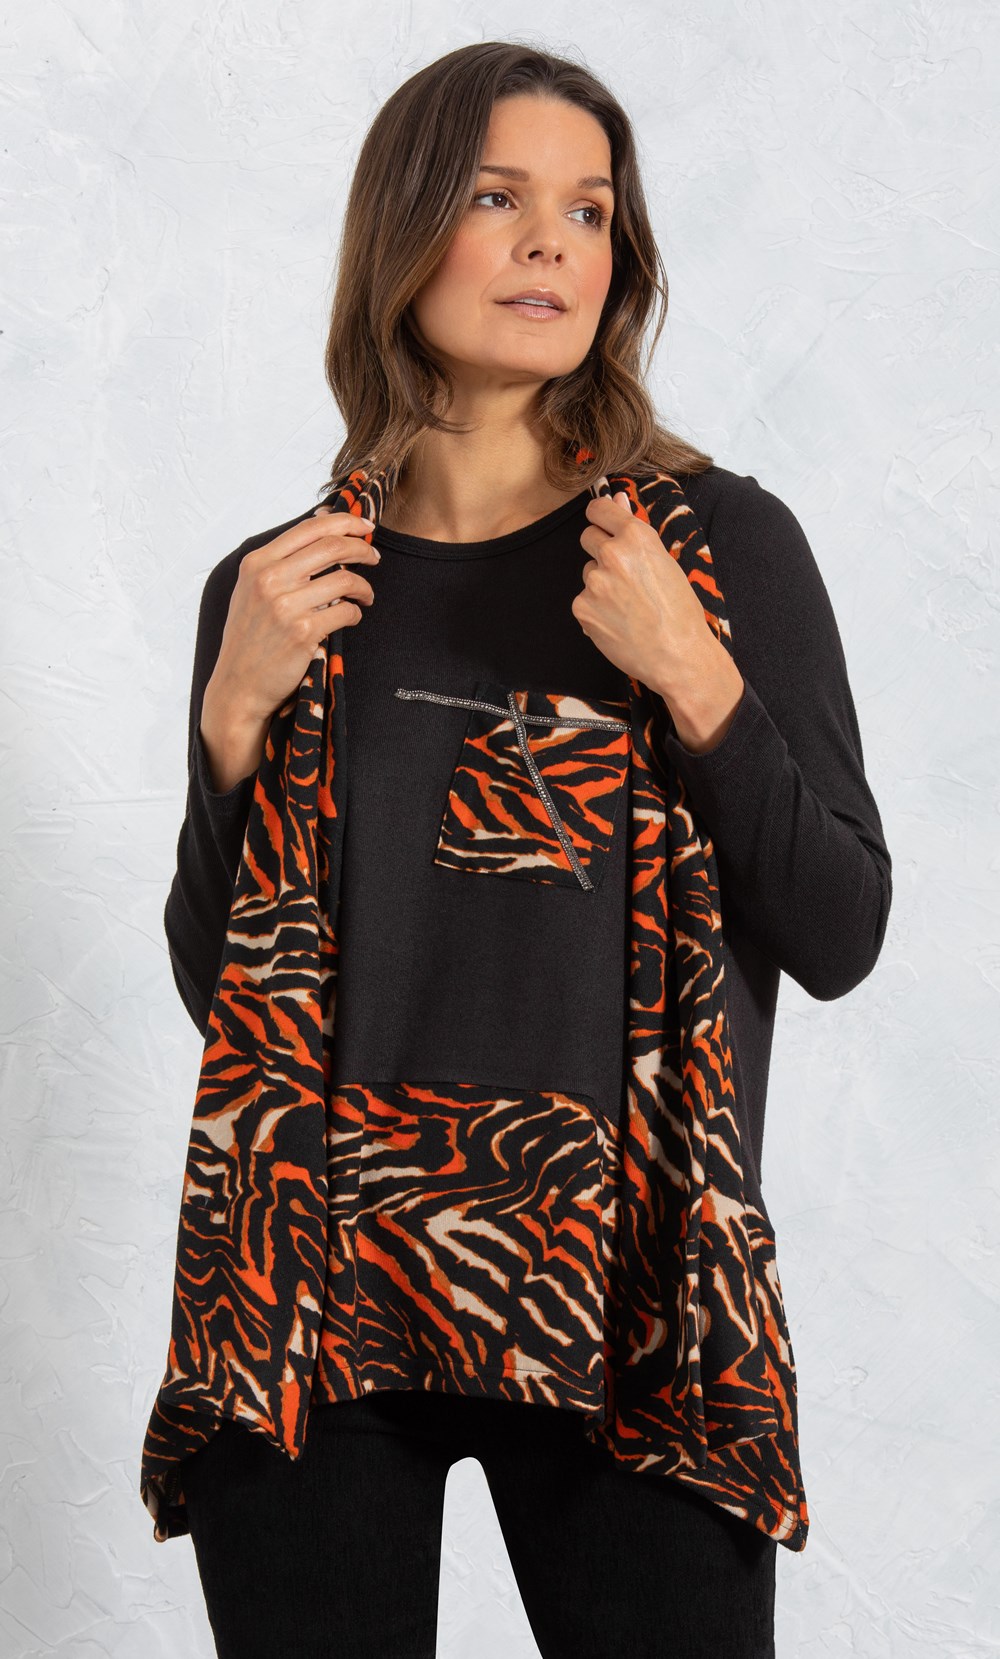 Brands - Klass Plain And Animal Print Dip Hem Knitted Tunic Top Black/Orange Women’s